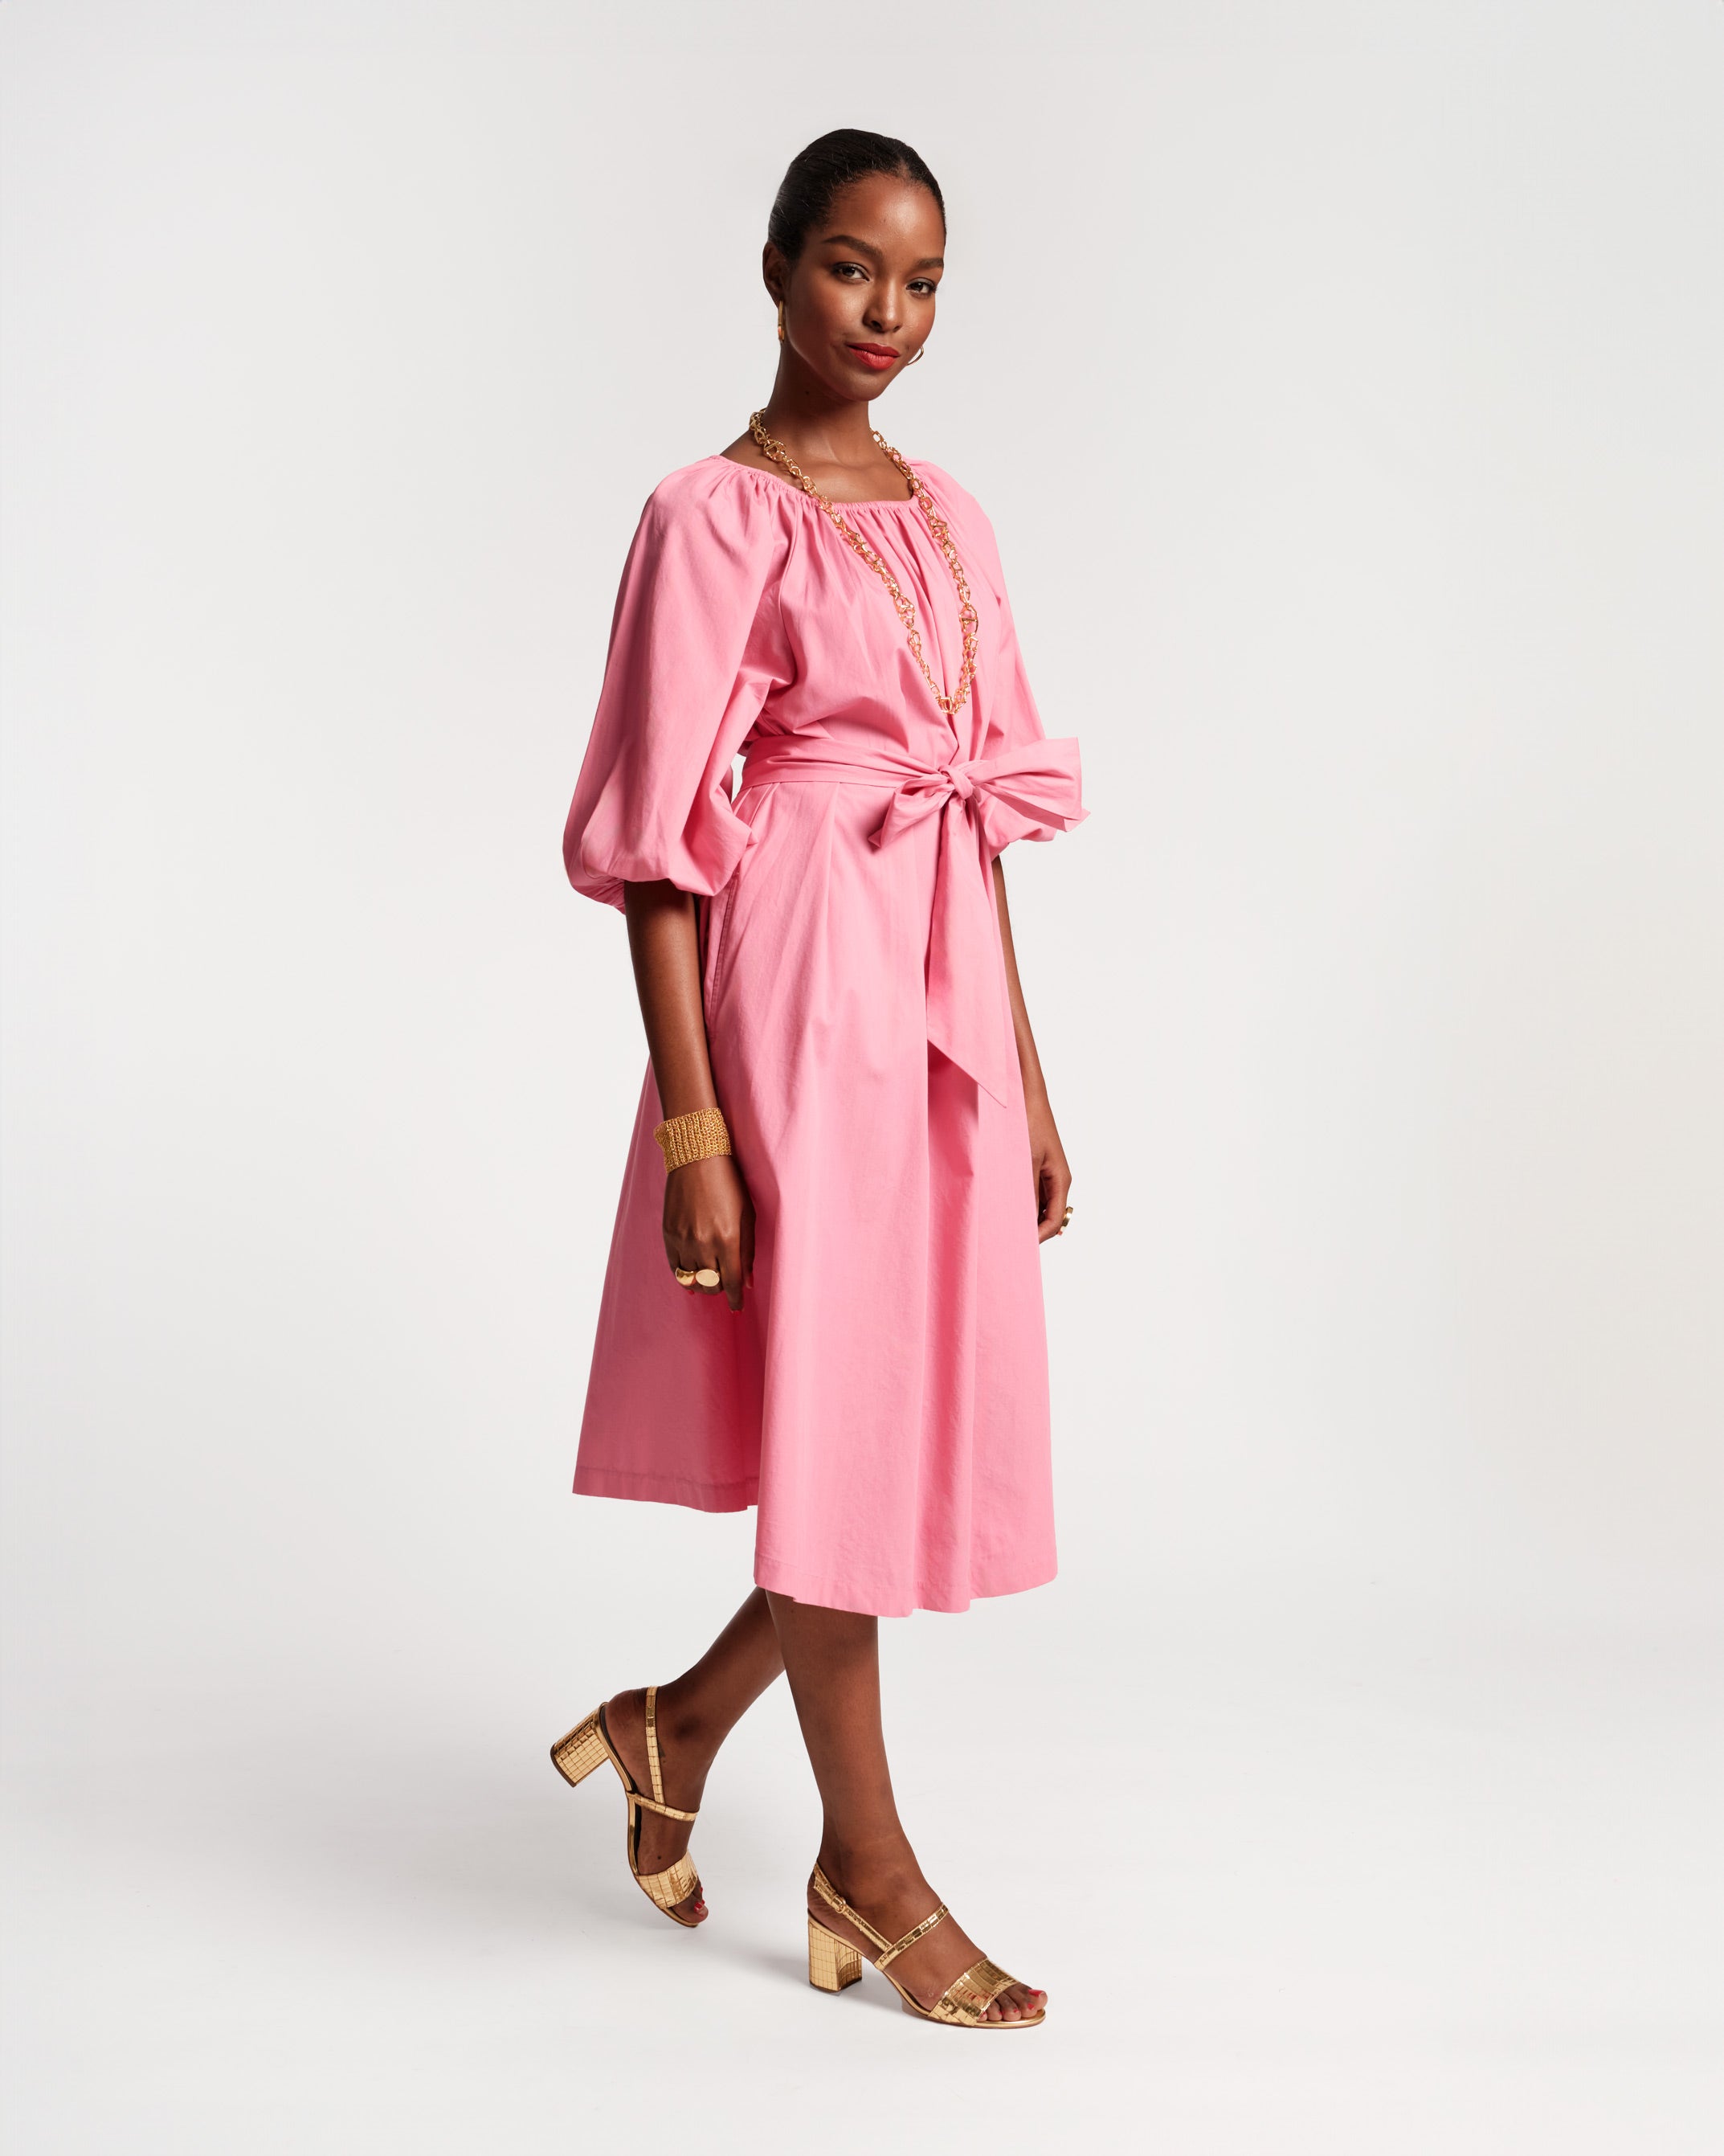 Stylish & Caftans Valentine | Frances Trendy Dresses 